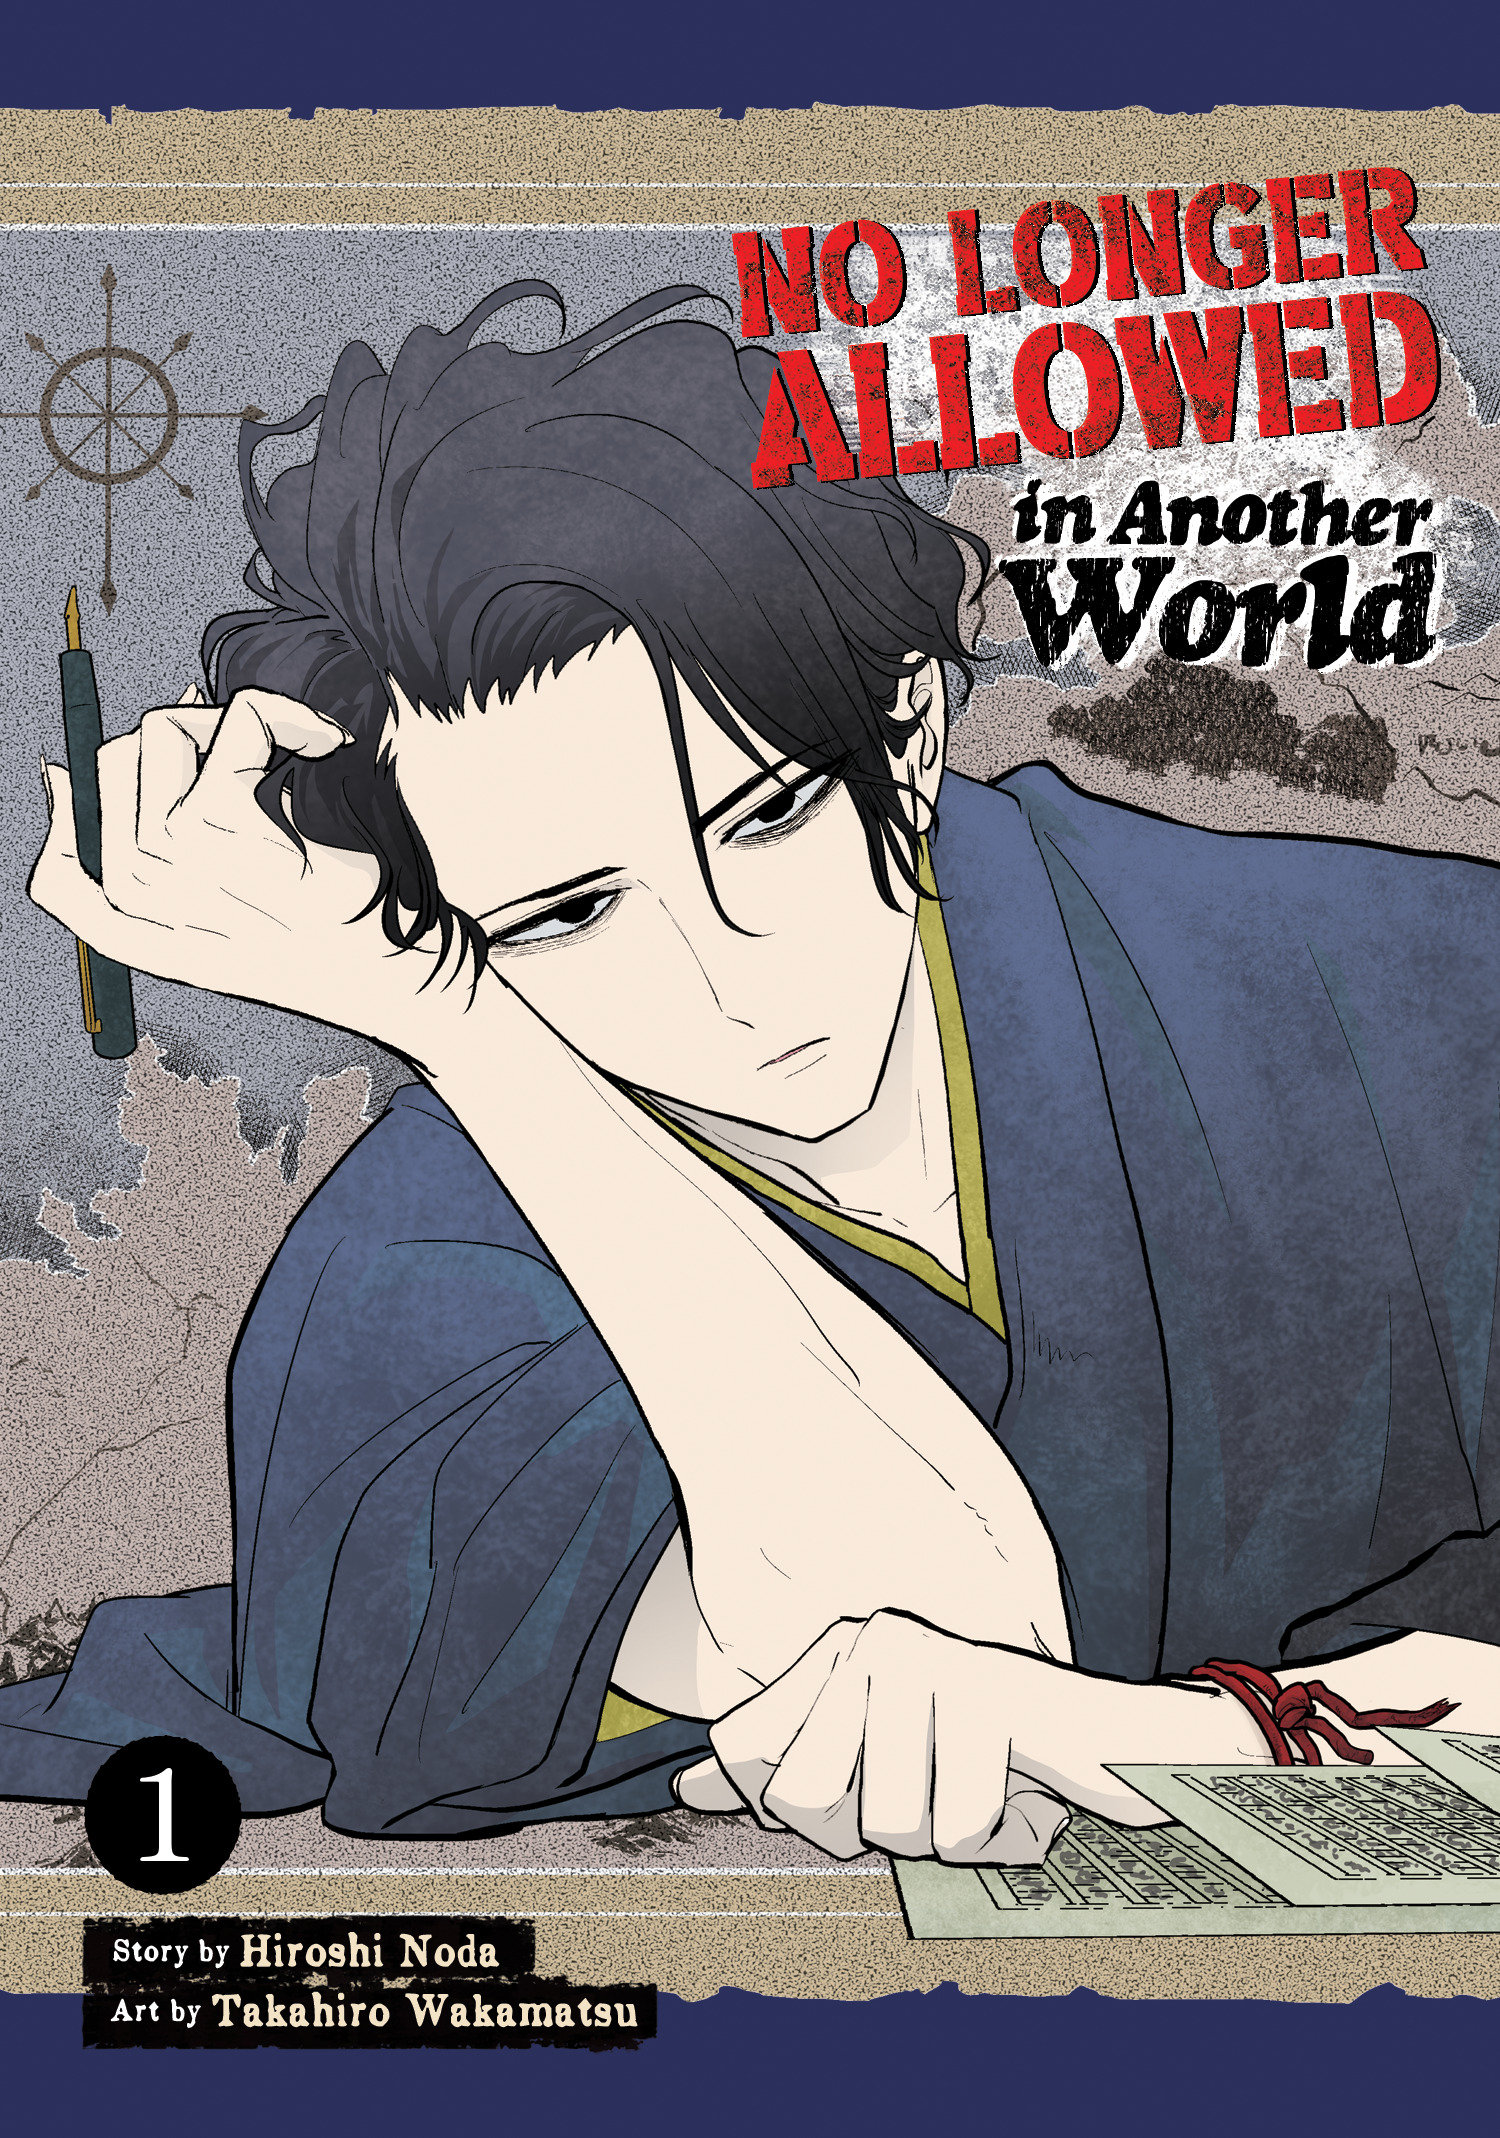 Love After World Domination Volume 1 - Manga Store 